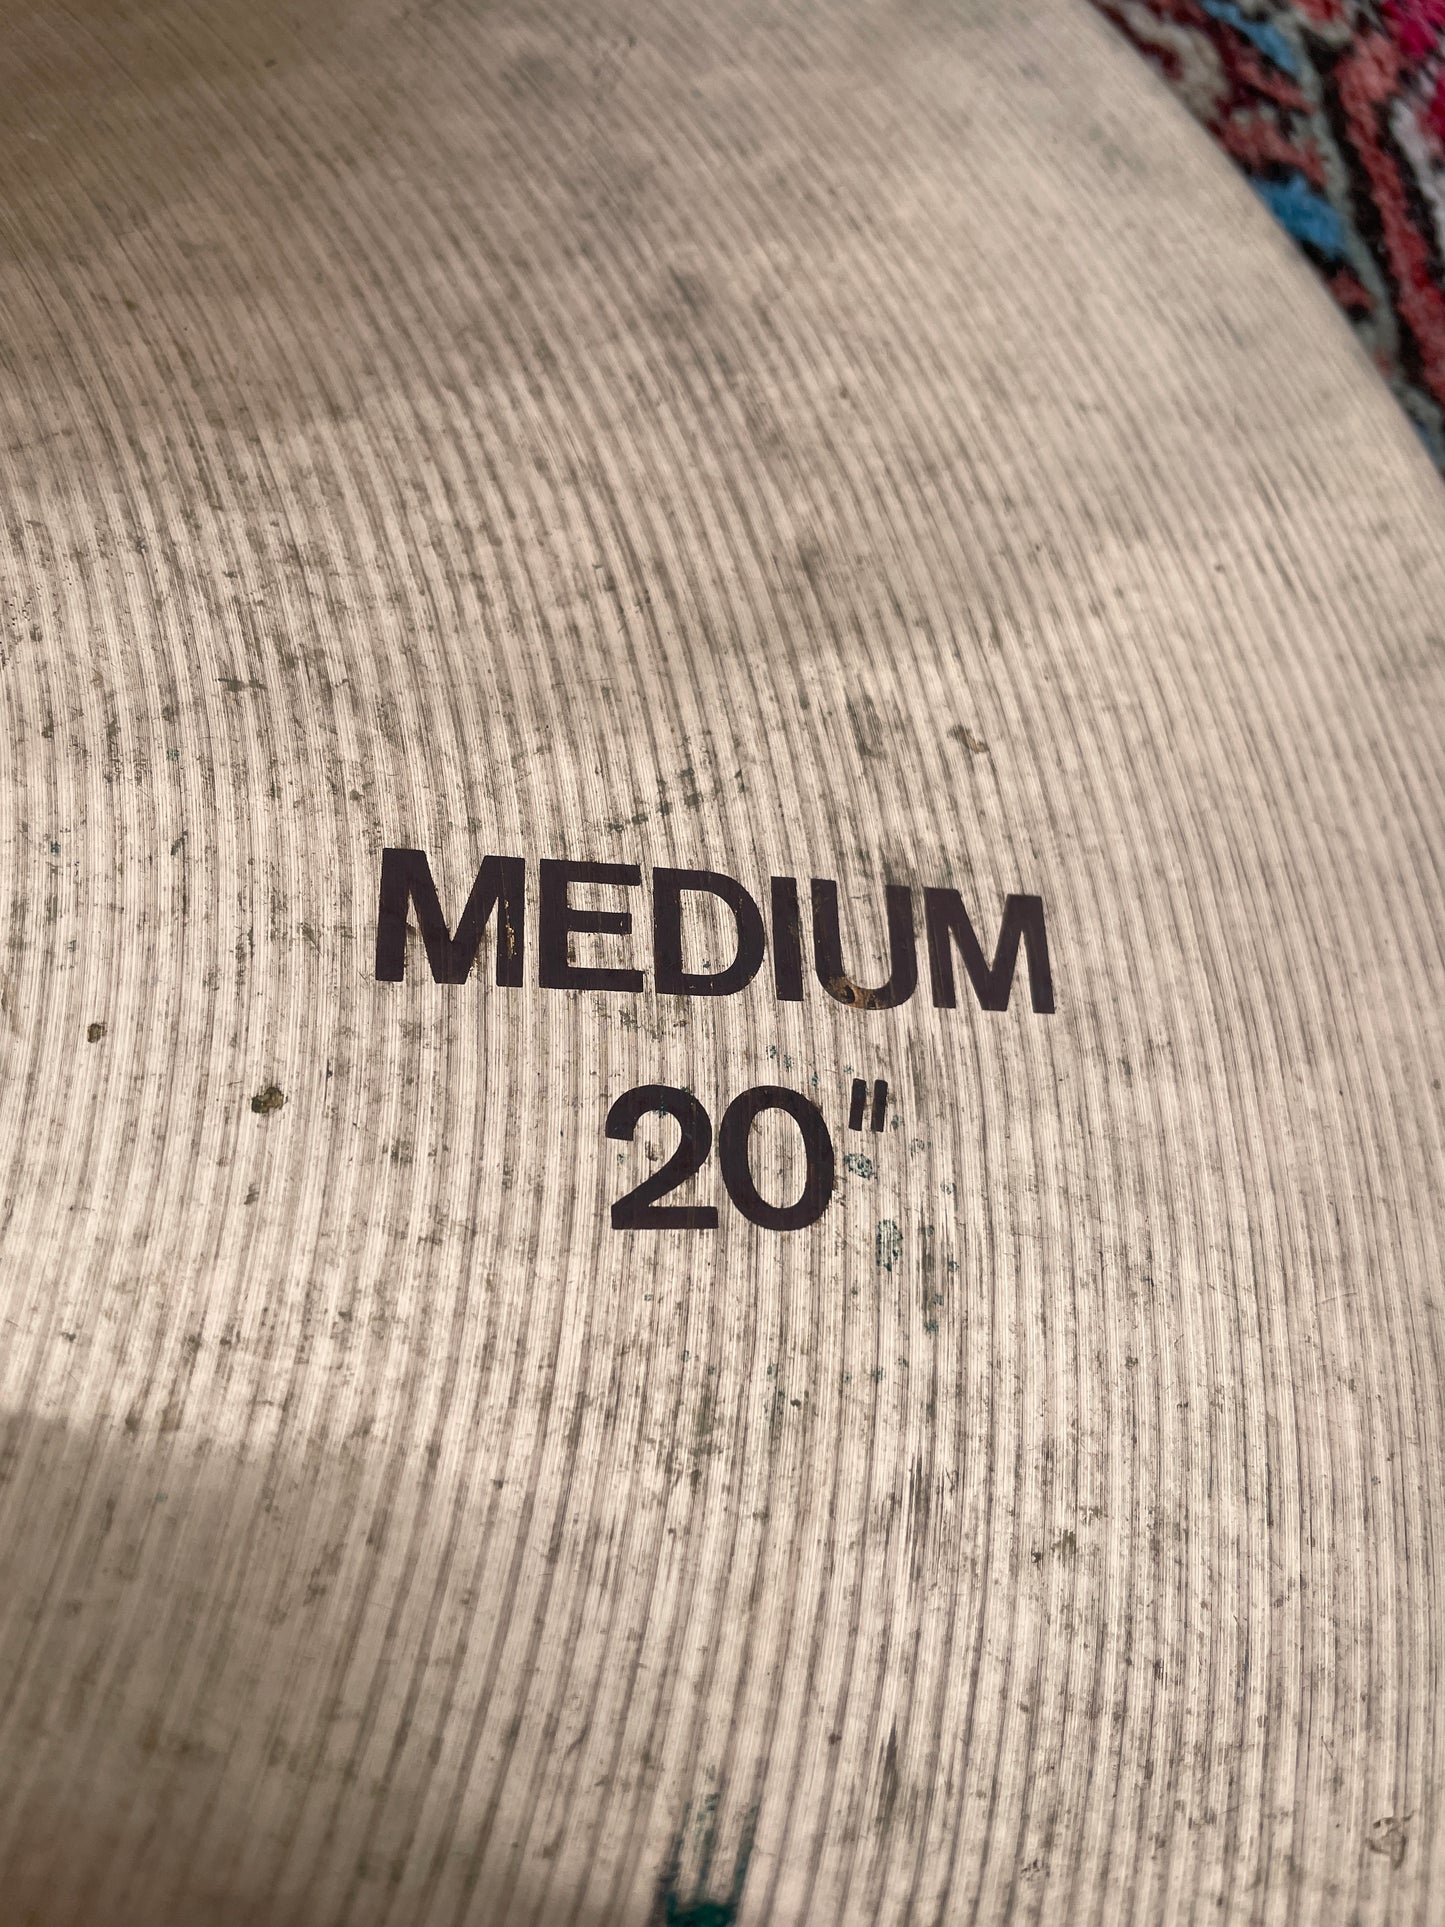 20" Paiste 404 Brown Label Medium Ride Cymbal 1844g